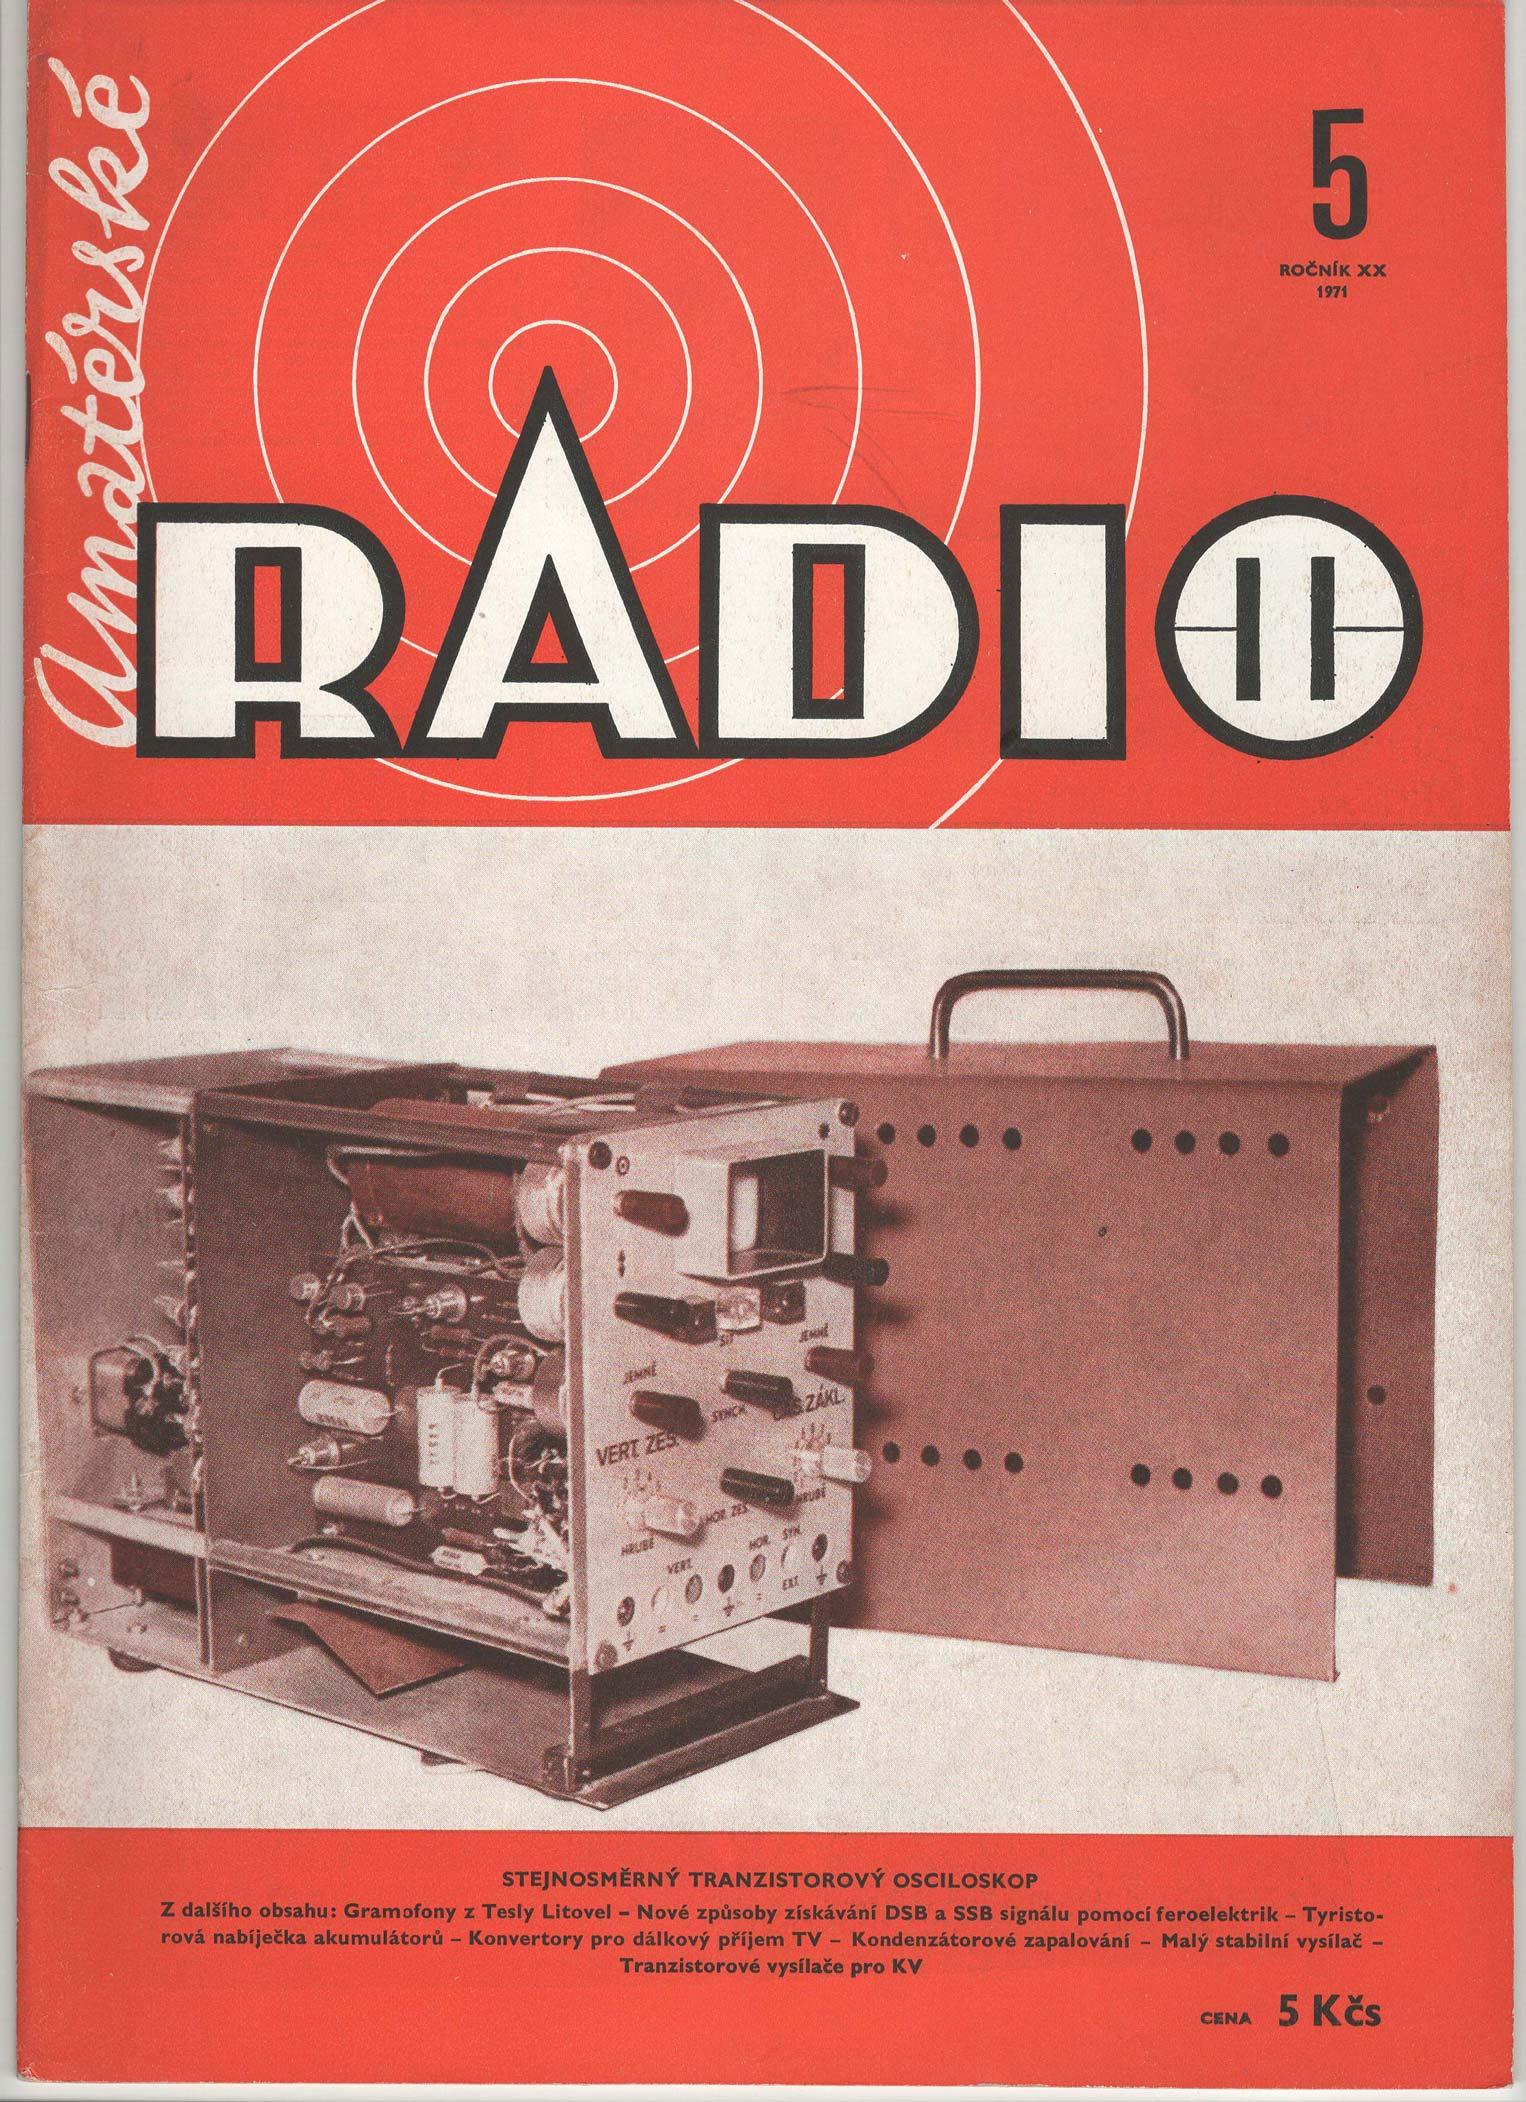 Amaterske Radio Magazine - 5 Rocnik XX 1971 - Rare Collectable